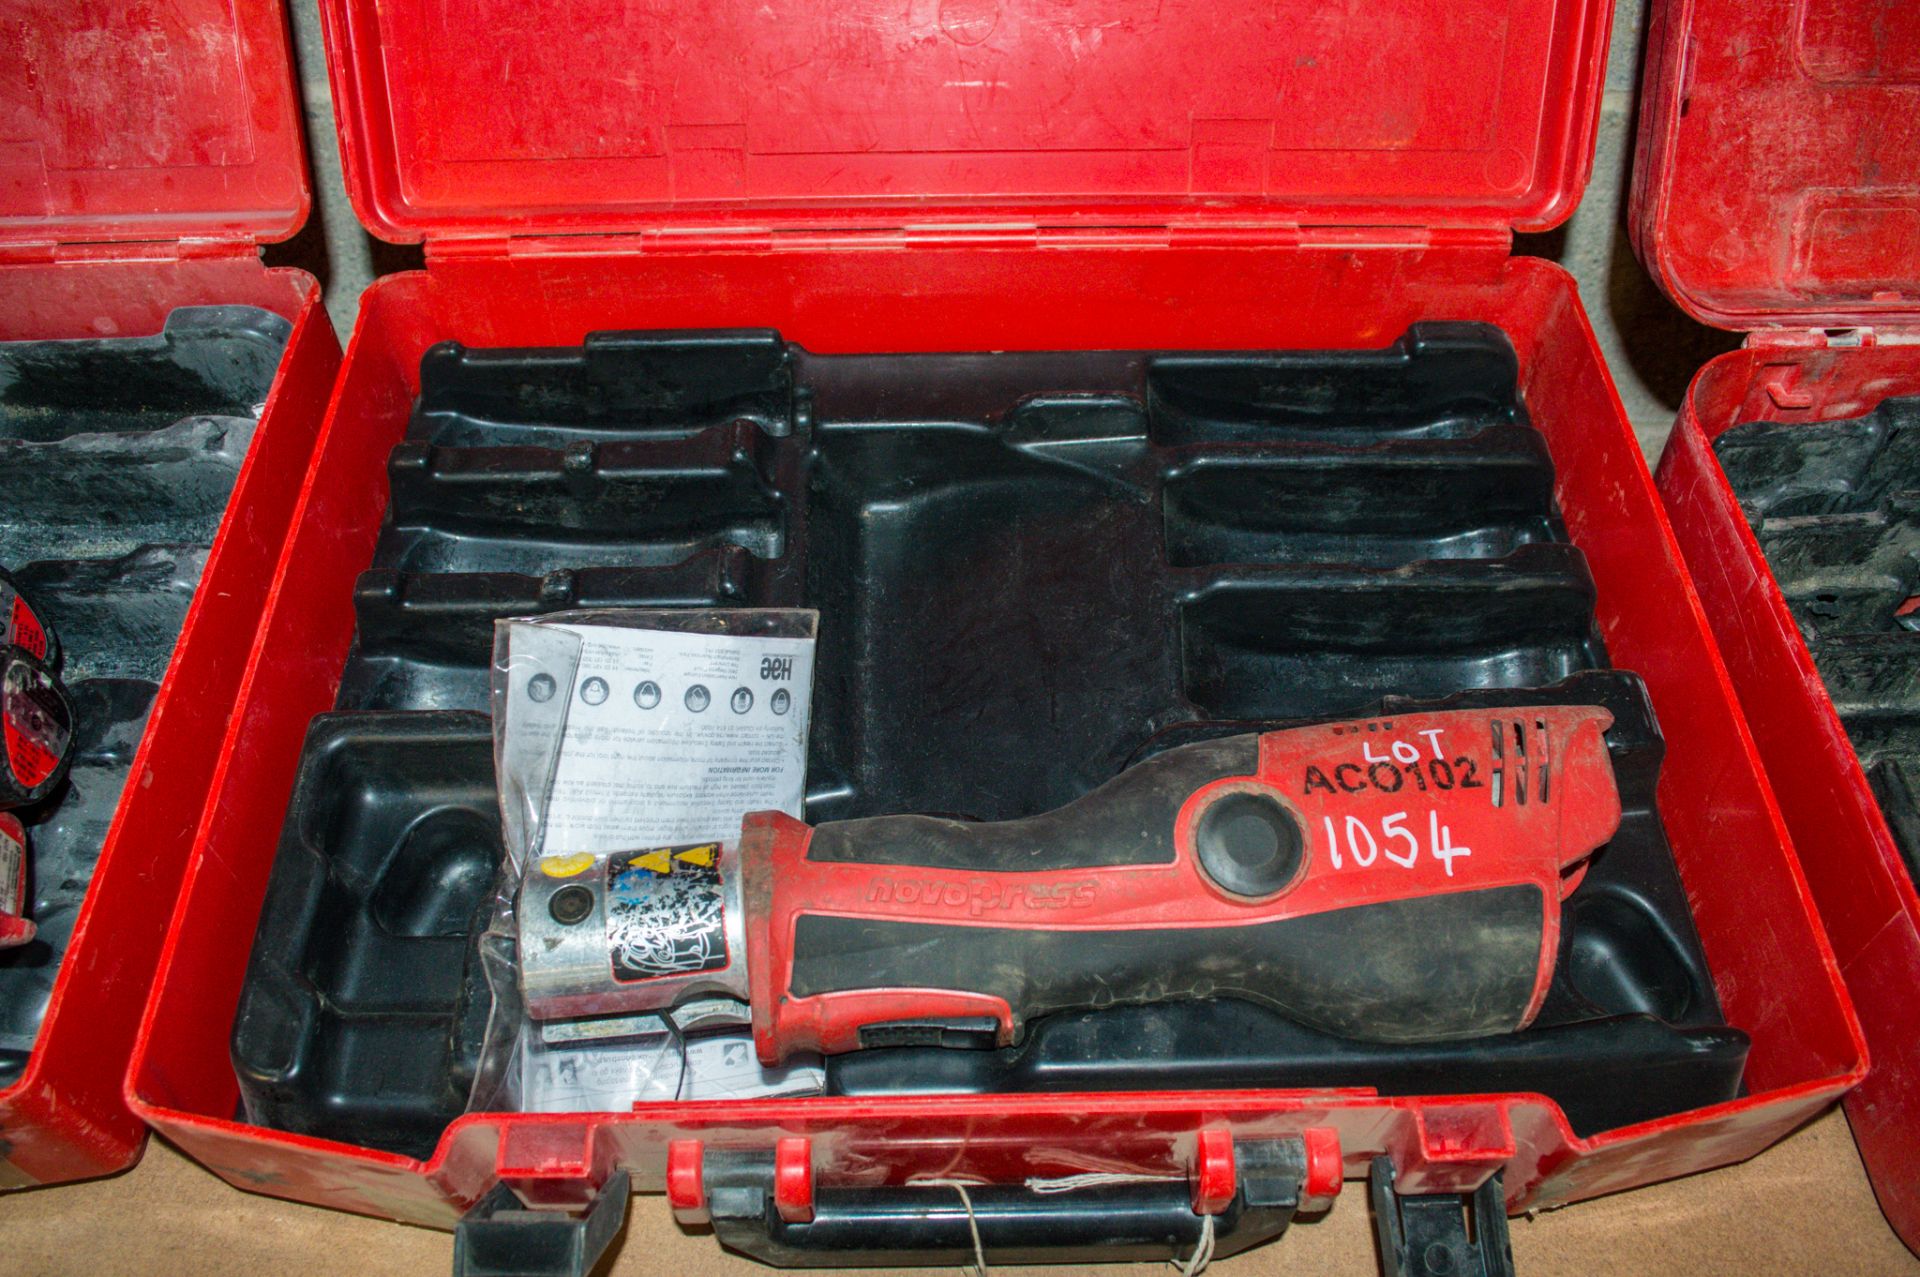 Novopress Aco102 cordless mini press tool c/w carry case PTH943